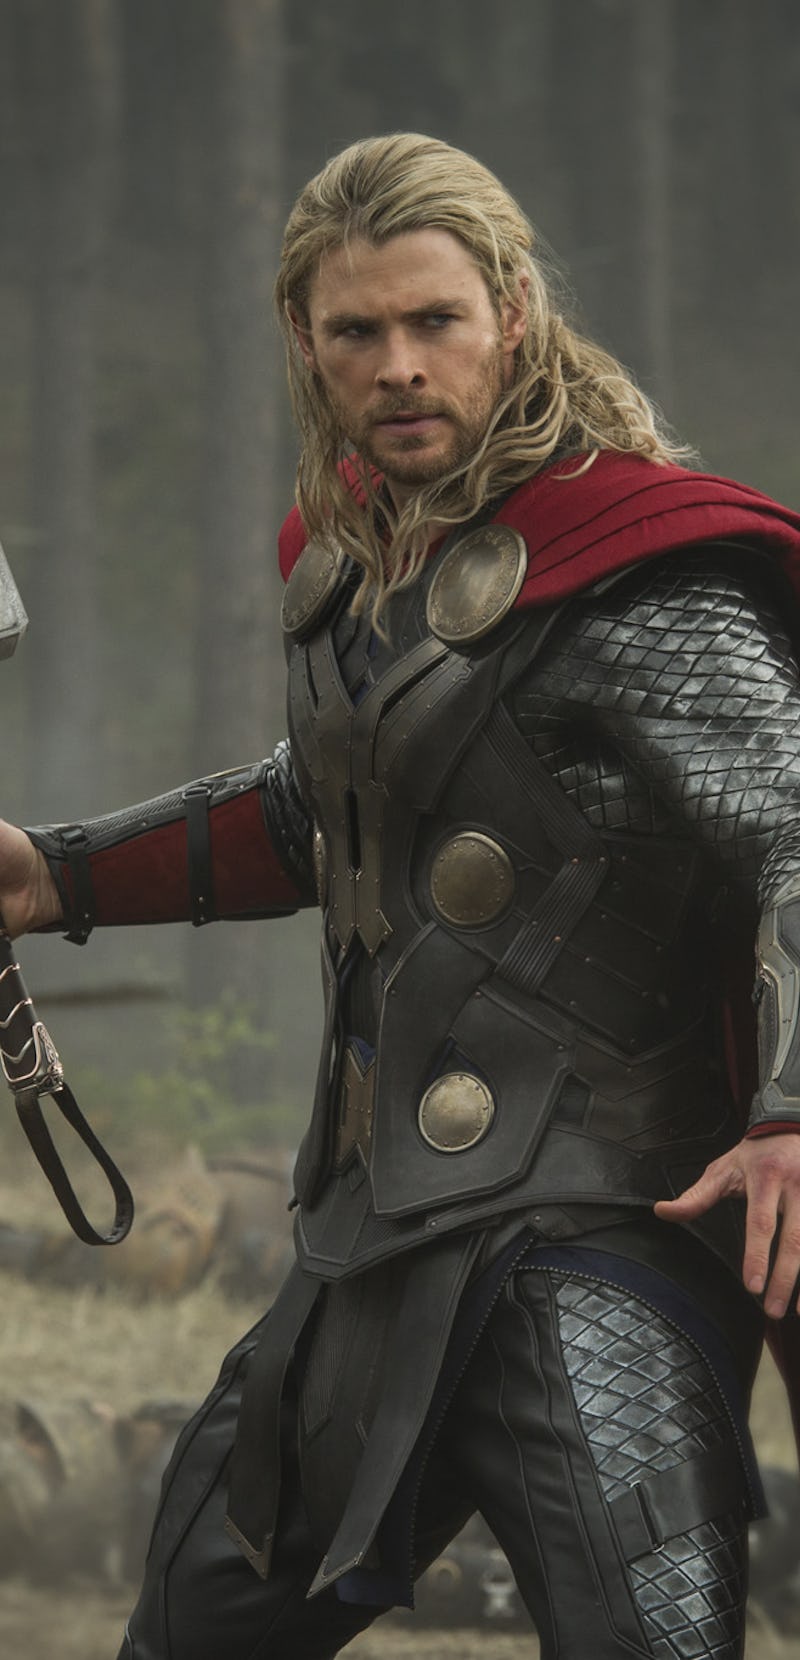 chris hemsworth as MCU's Thor